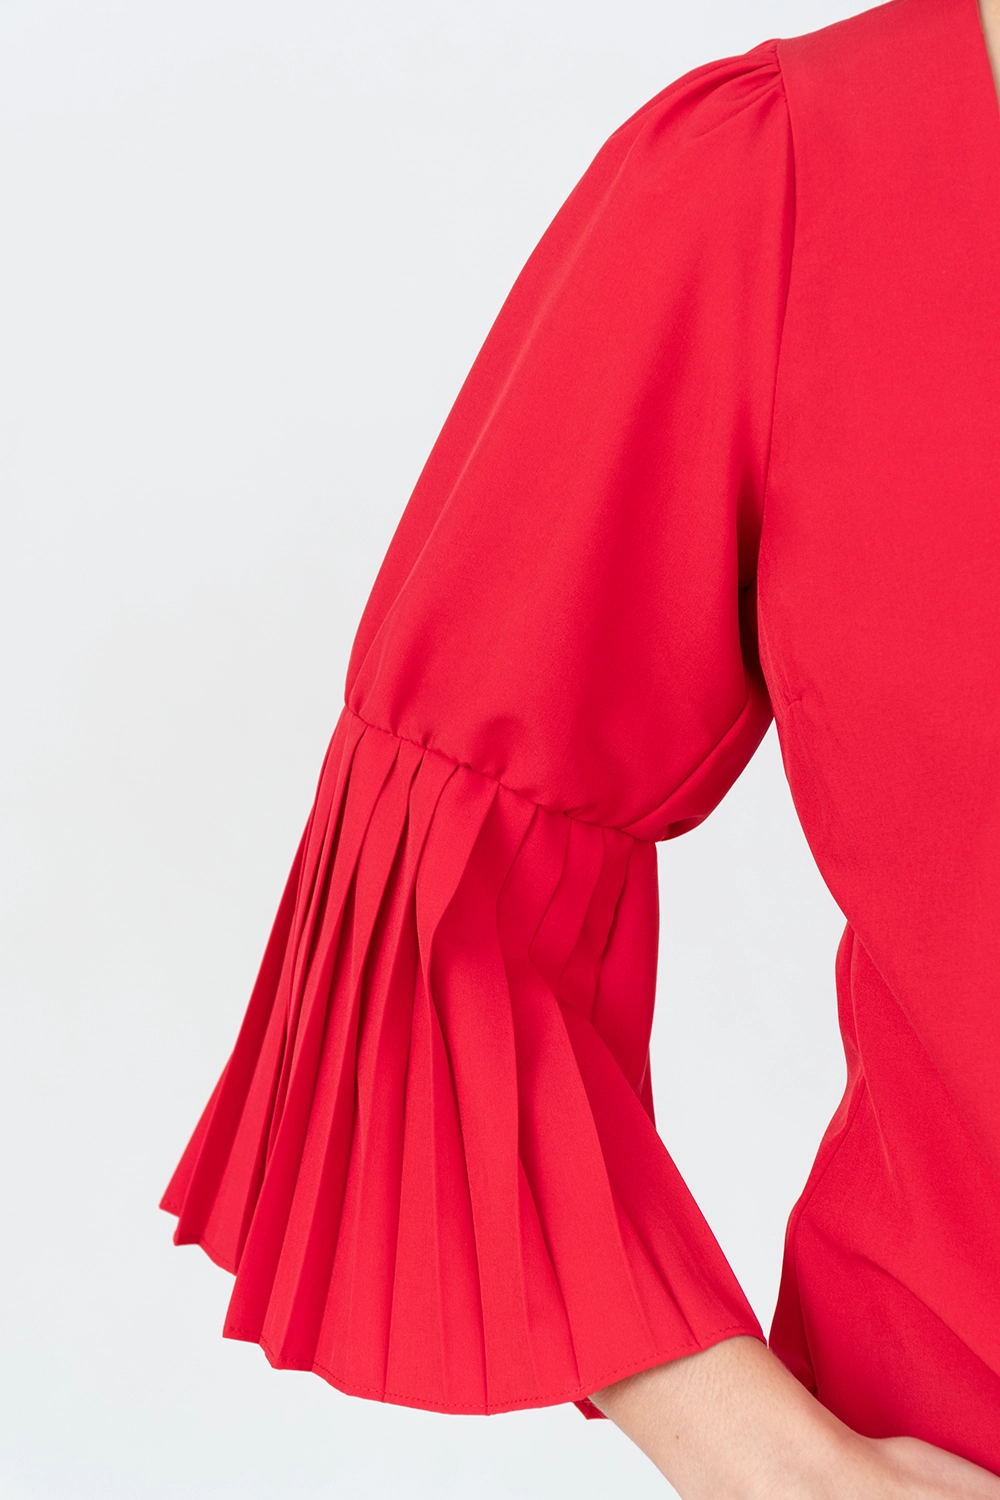 Blusa maga 3/4 plisada escote cuadrado. Rojo talla 8